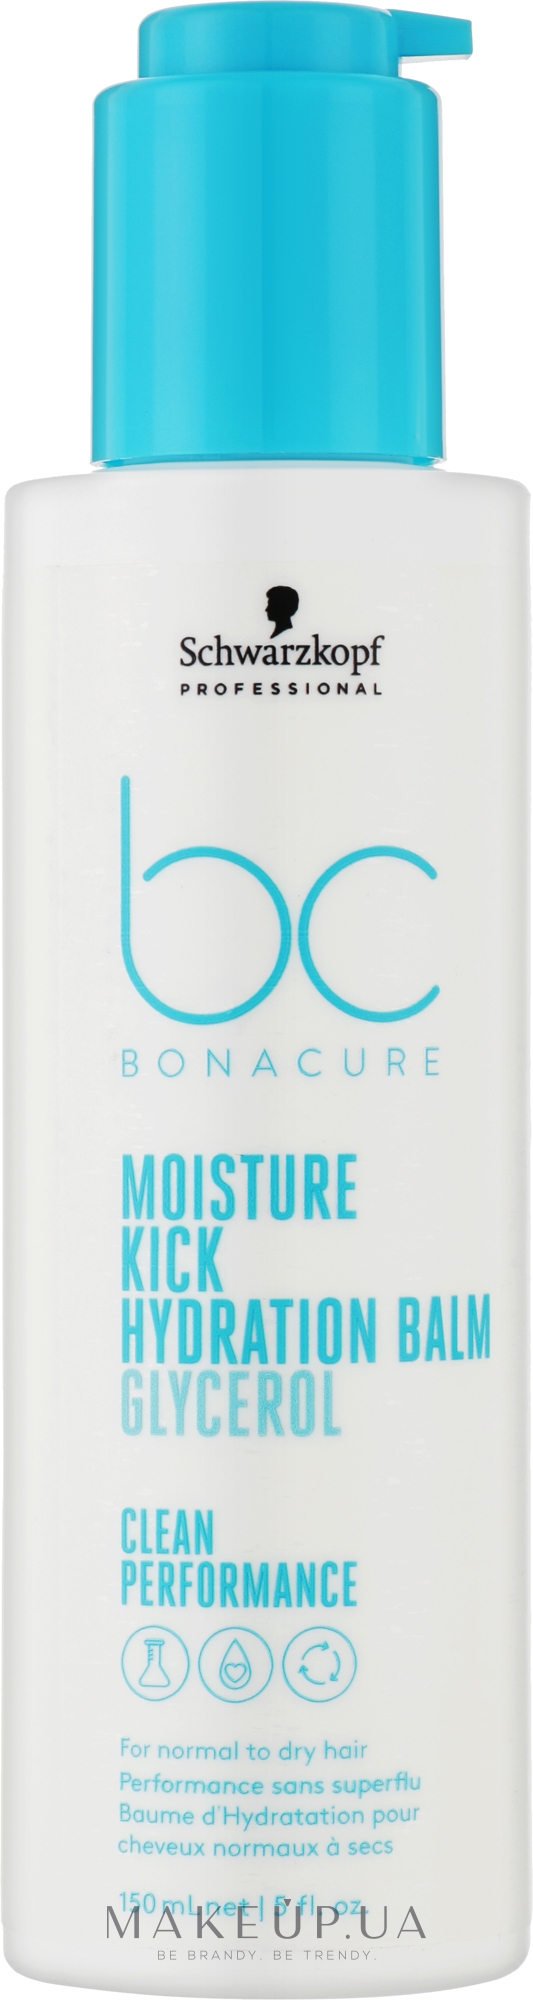 Бальзам для нормального й сухого волосся - Schwarzkopf Professional Bonacure Moisture Kick Hydration Balm Glycerol — фото 150ml